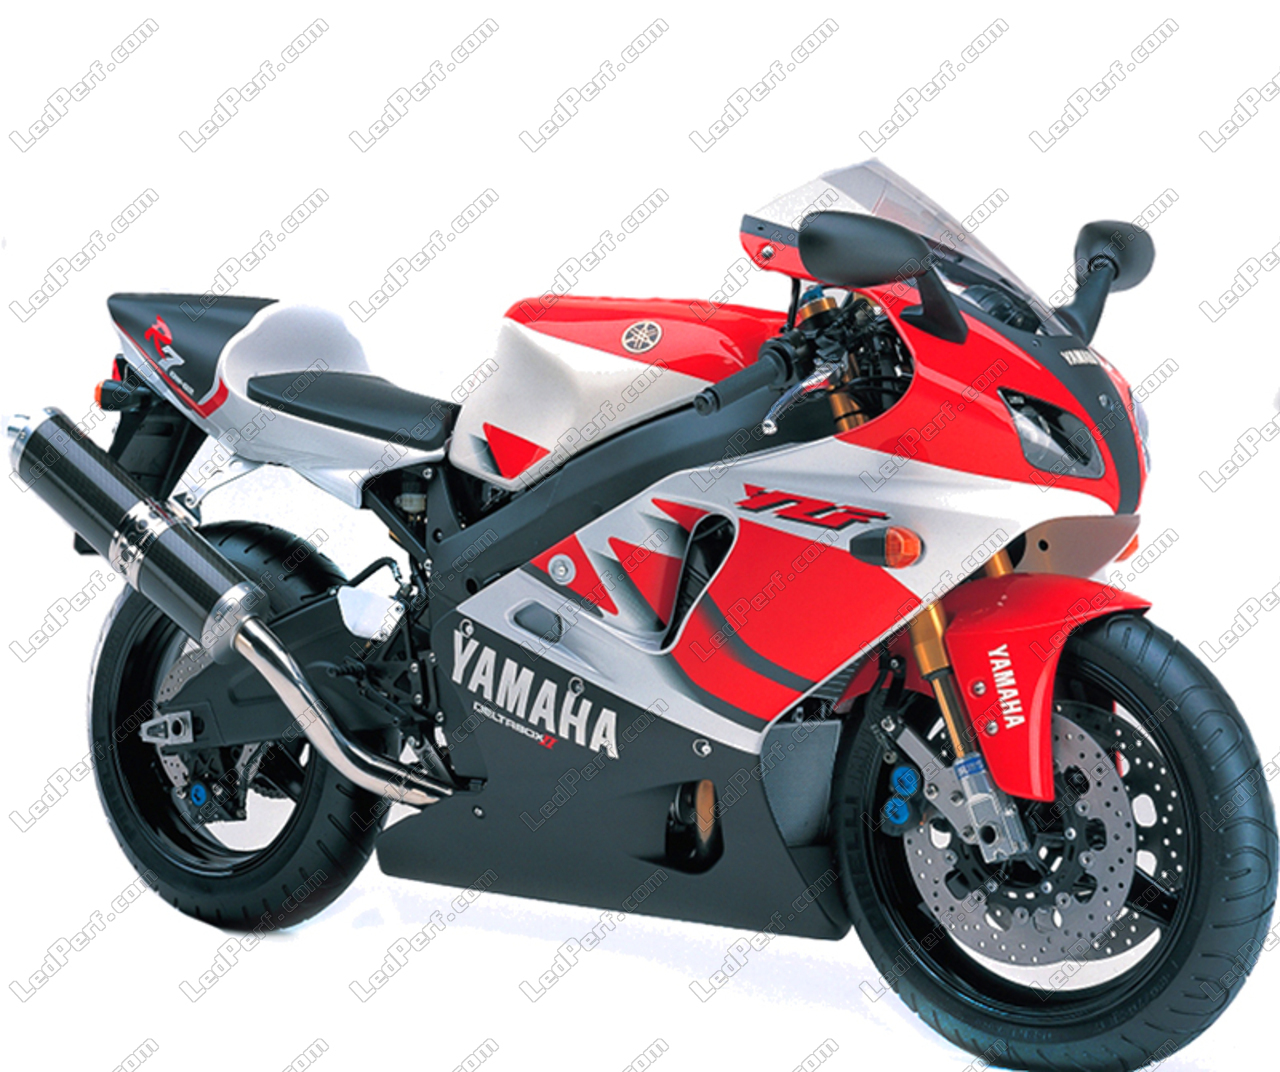 https://www.ledperf.us/images/models/ledperf.com/._1/additional-led-headlights-for-motorcycle-yamaha-yzf-r7-750-long-range_73625.jpg